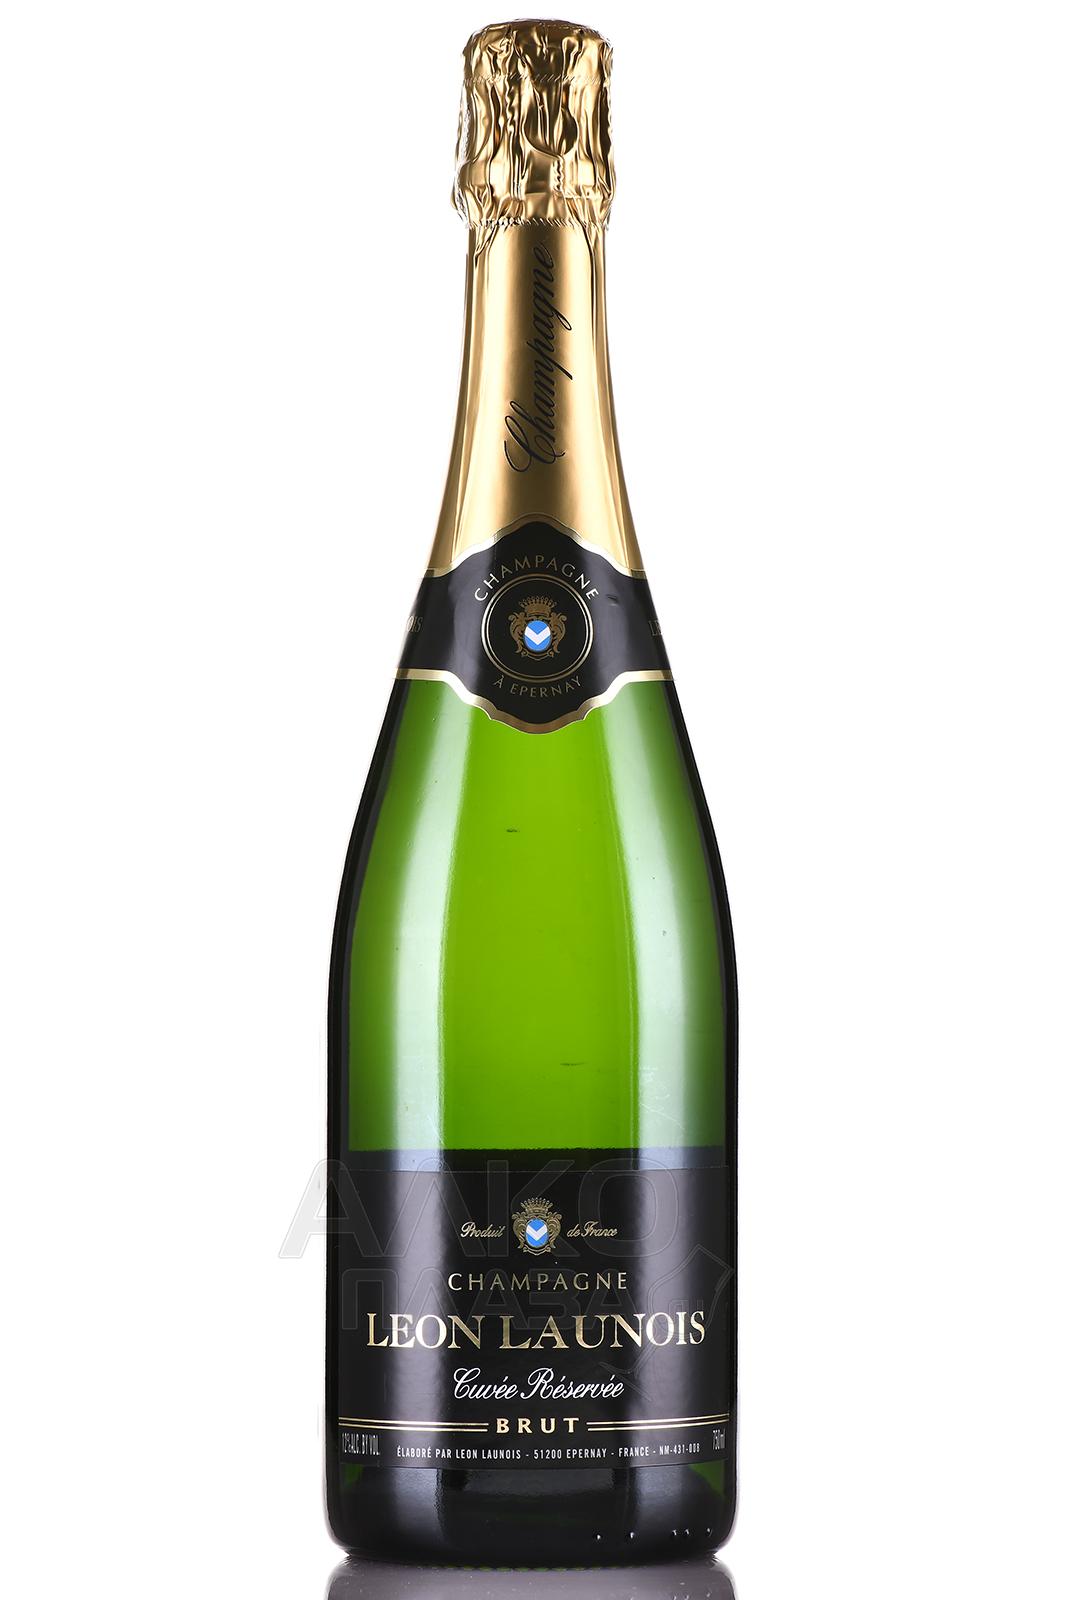 Champagne Leon Launois, Cuvee Prestige Bru